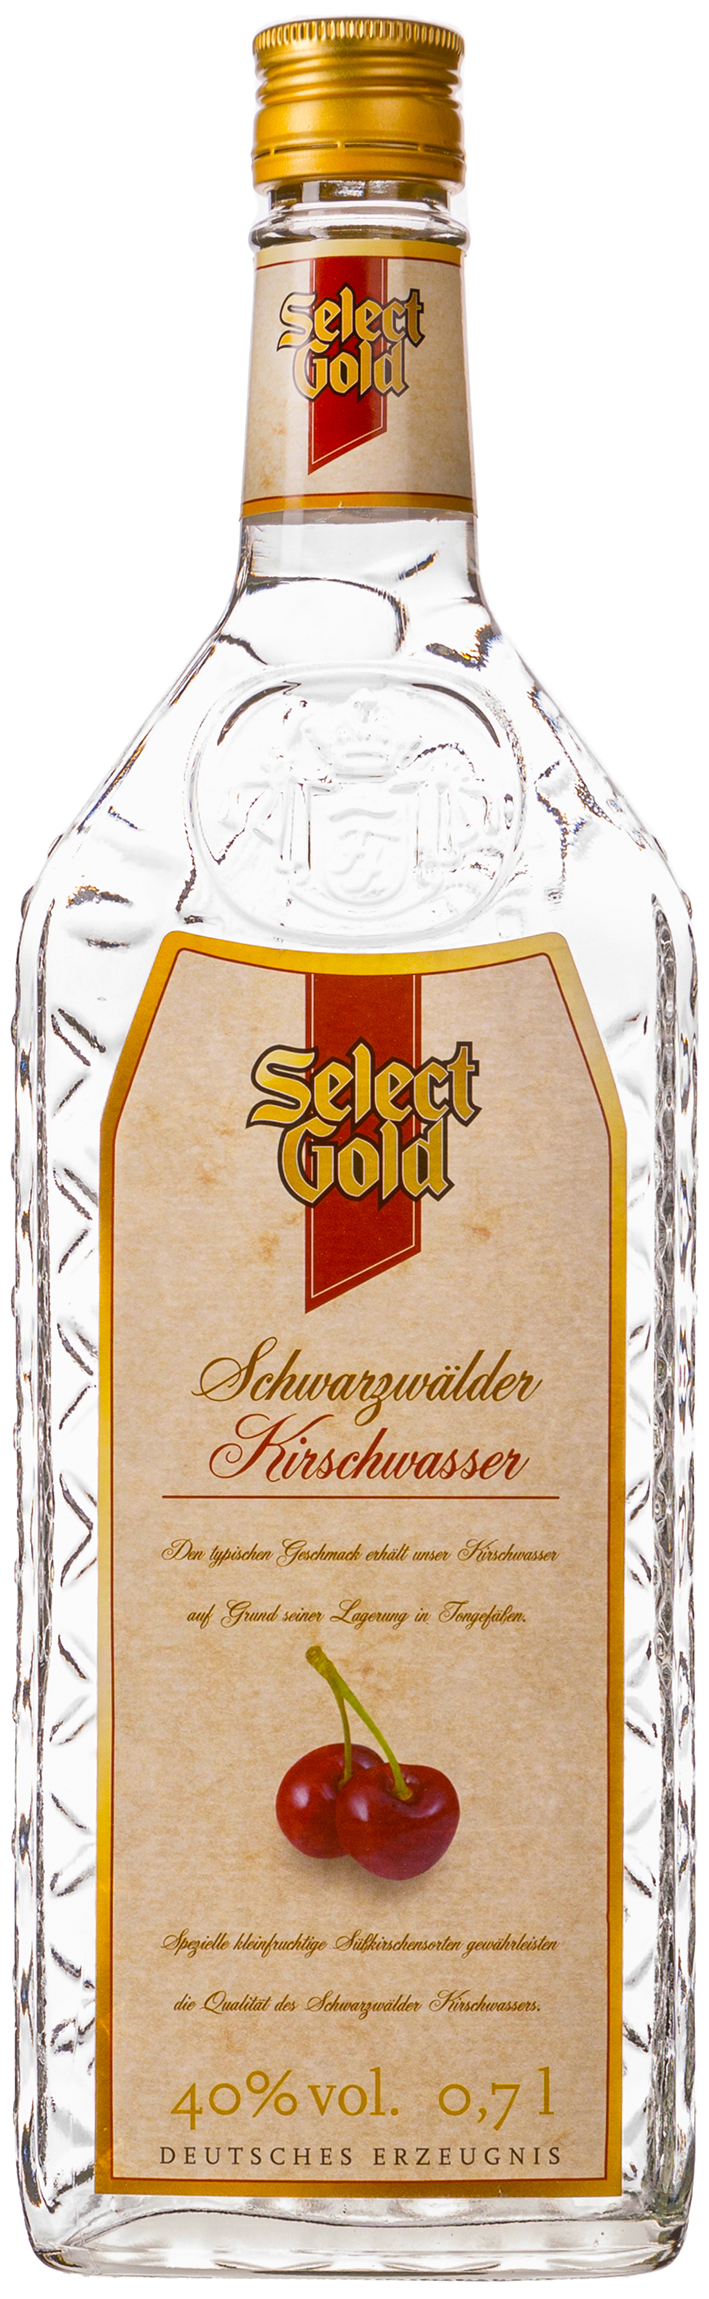 Select Gold Schwarzwälder Kirschwasser 40% vol. 0,7L